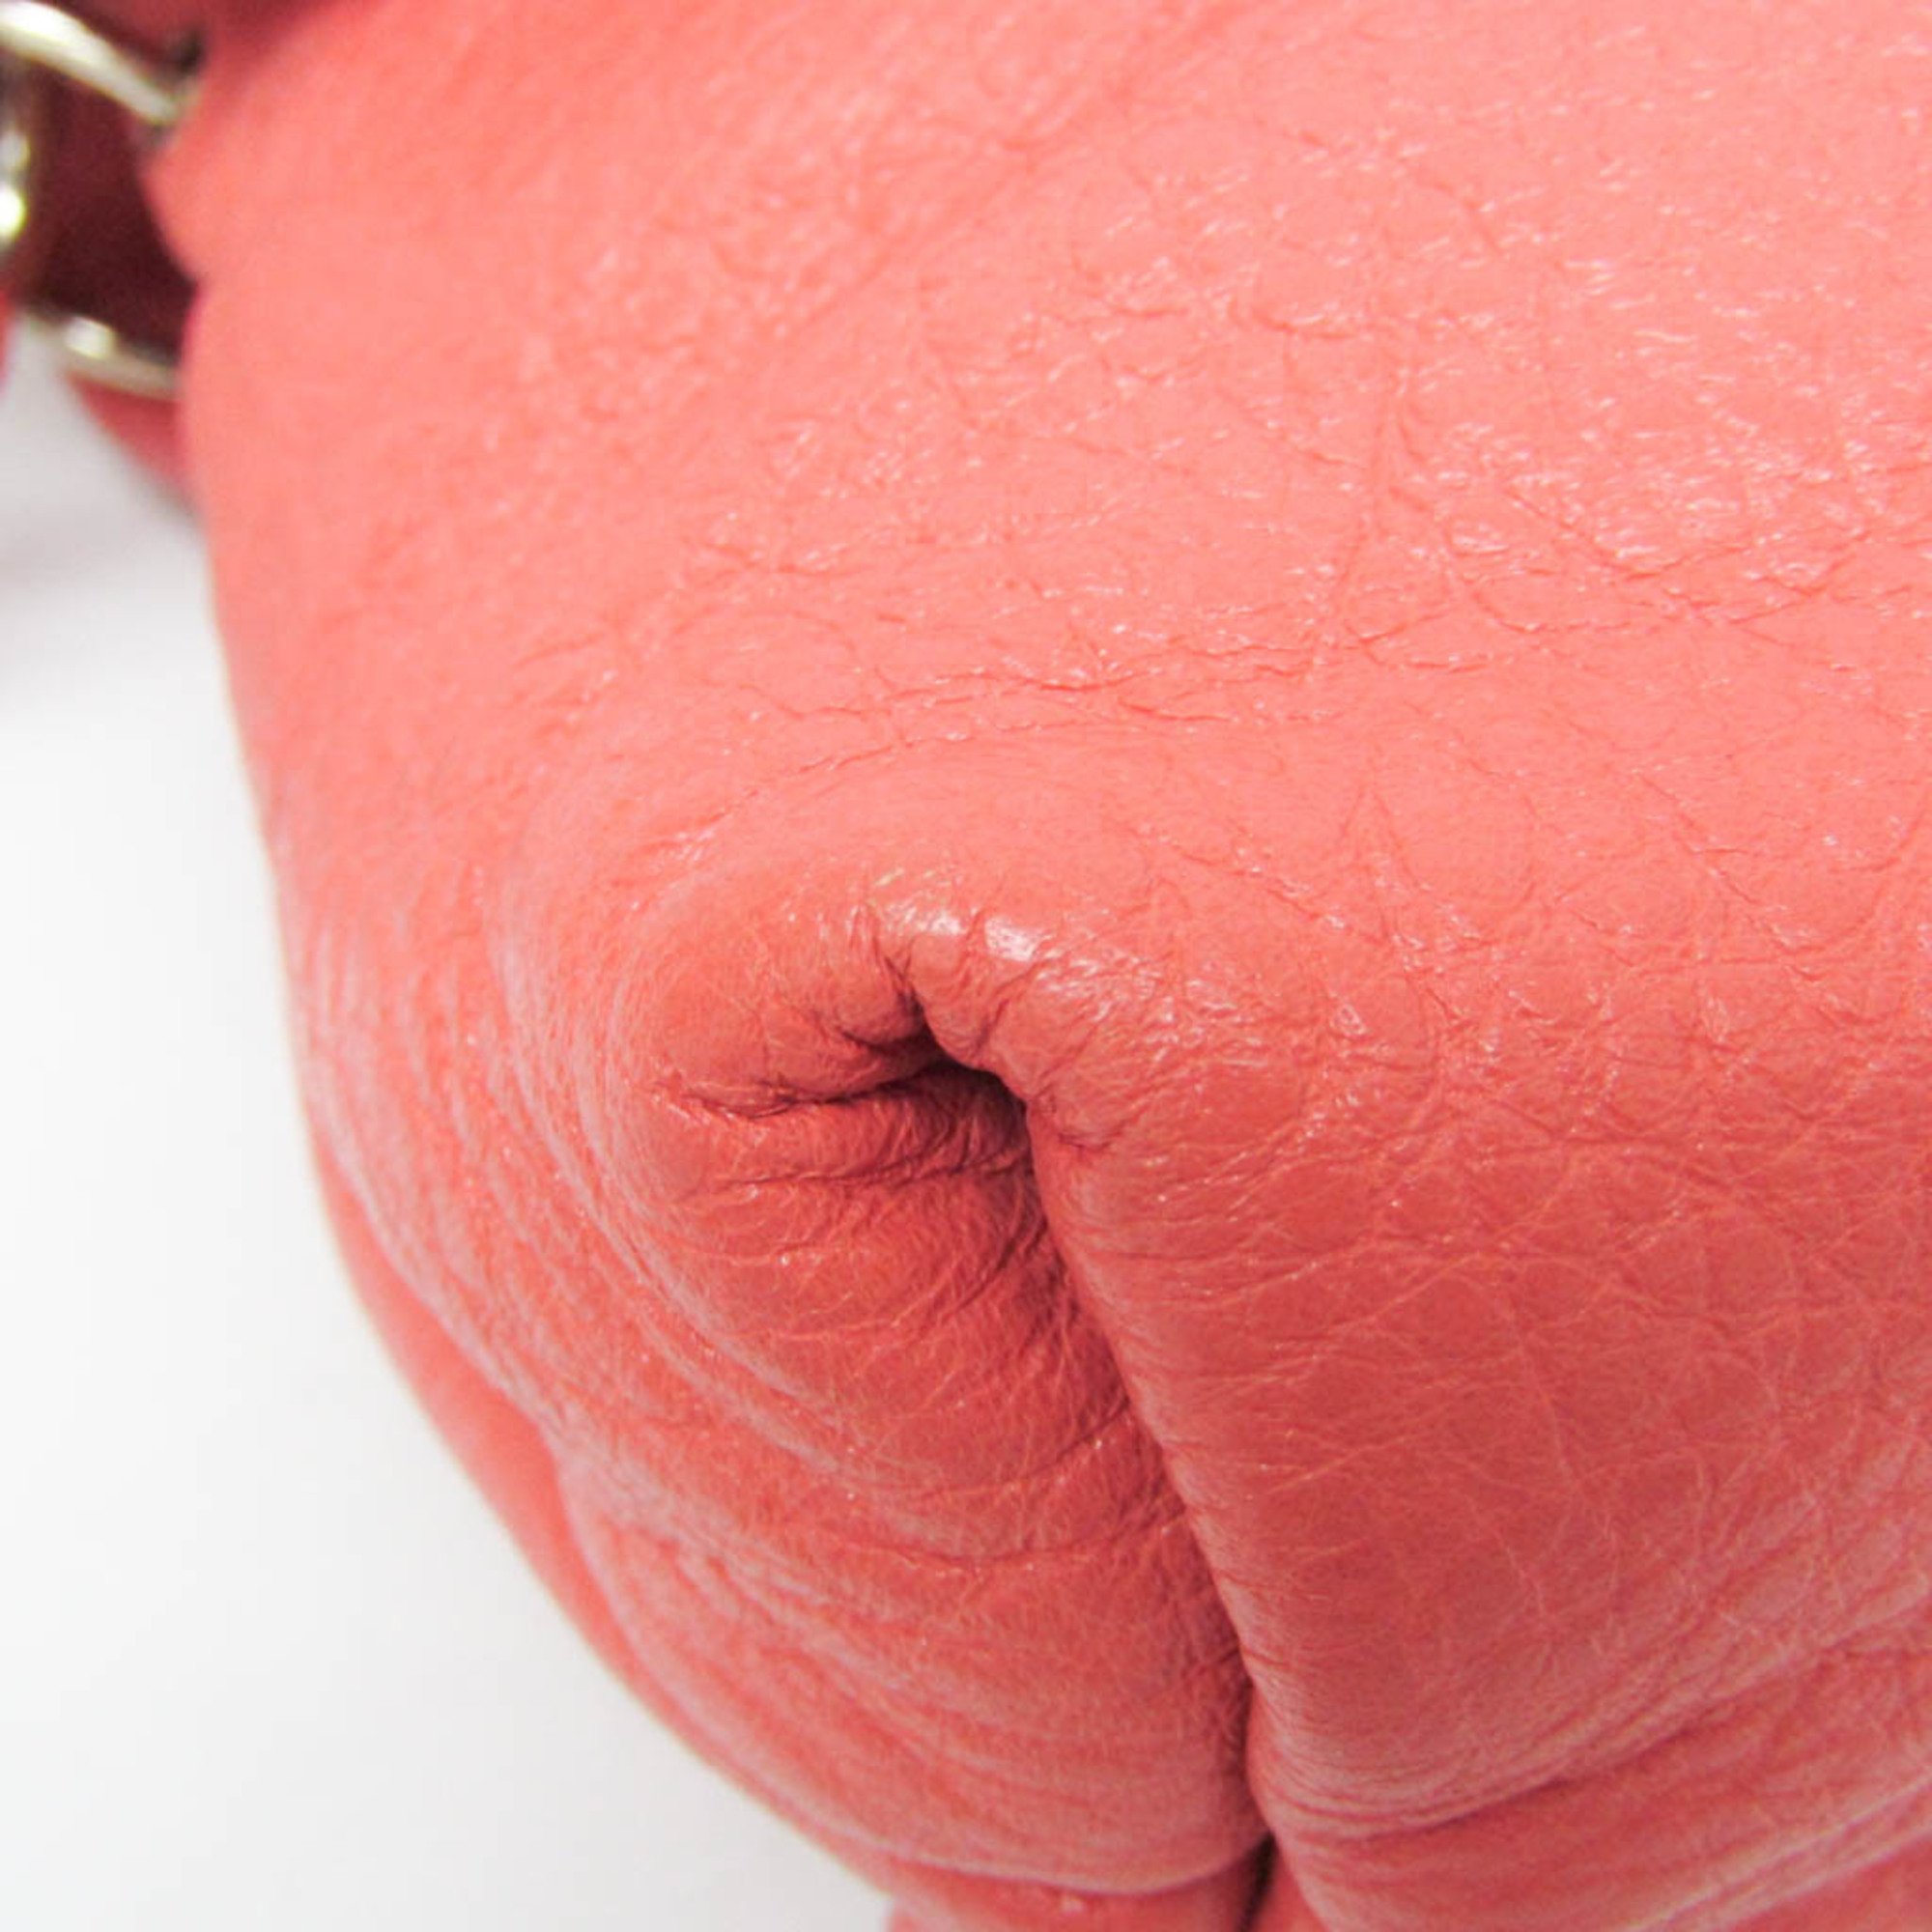 Chloé Lily Women's Leather Shoulder Bag Light Pink